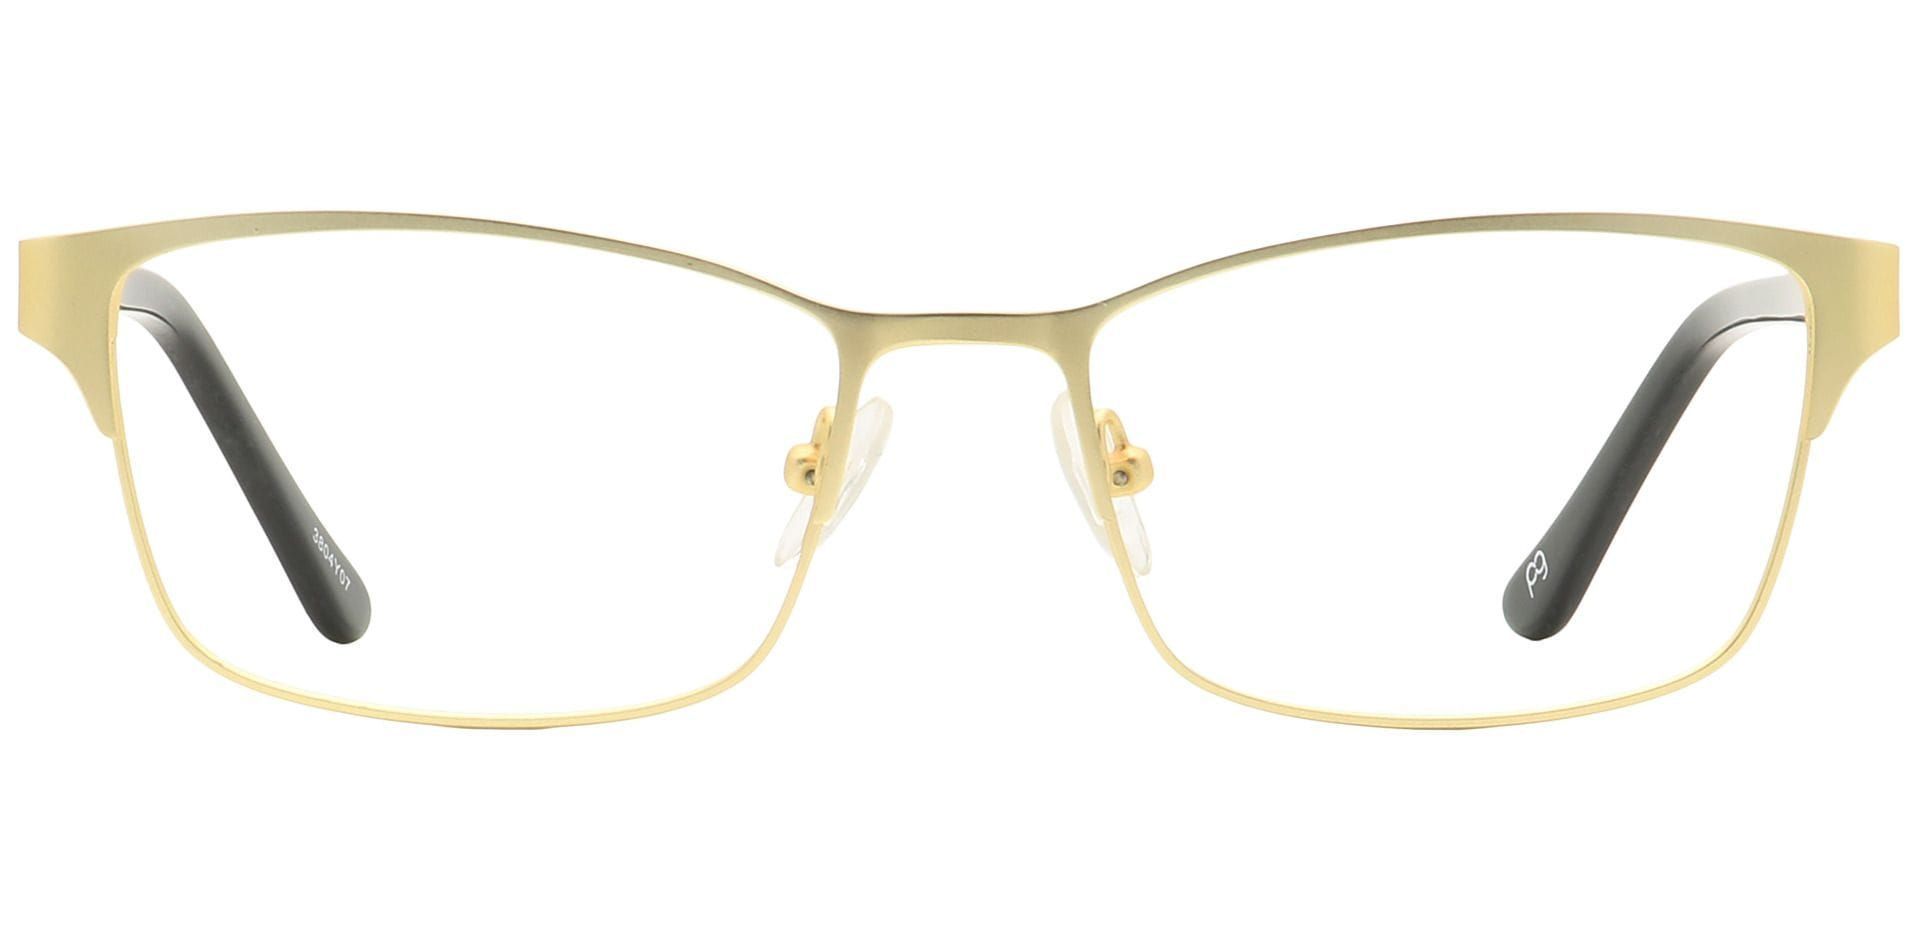 Tella Rectangle Lined Bifocal Glasses - Yellow